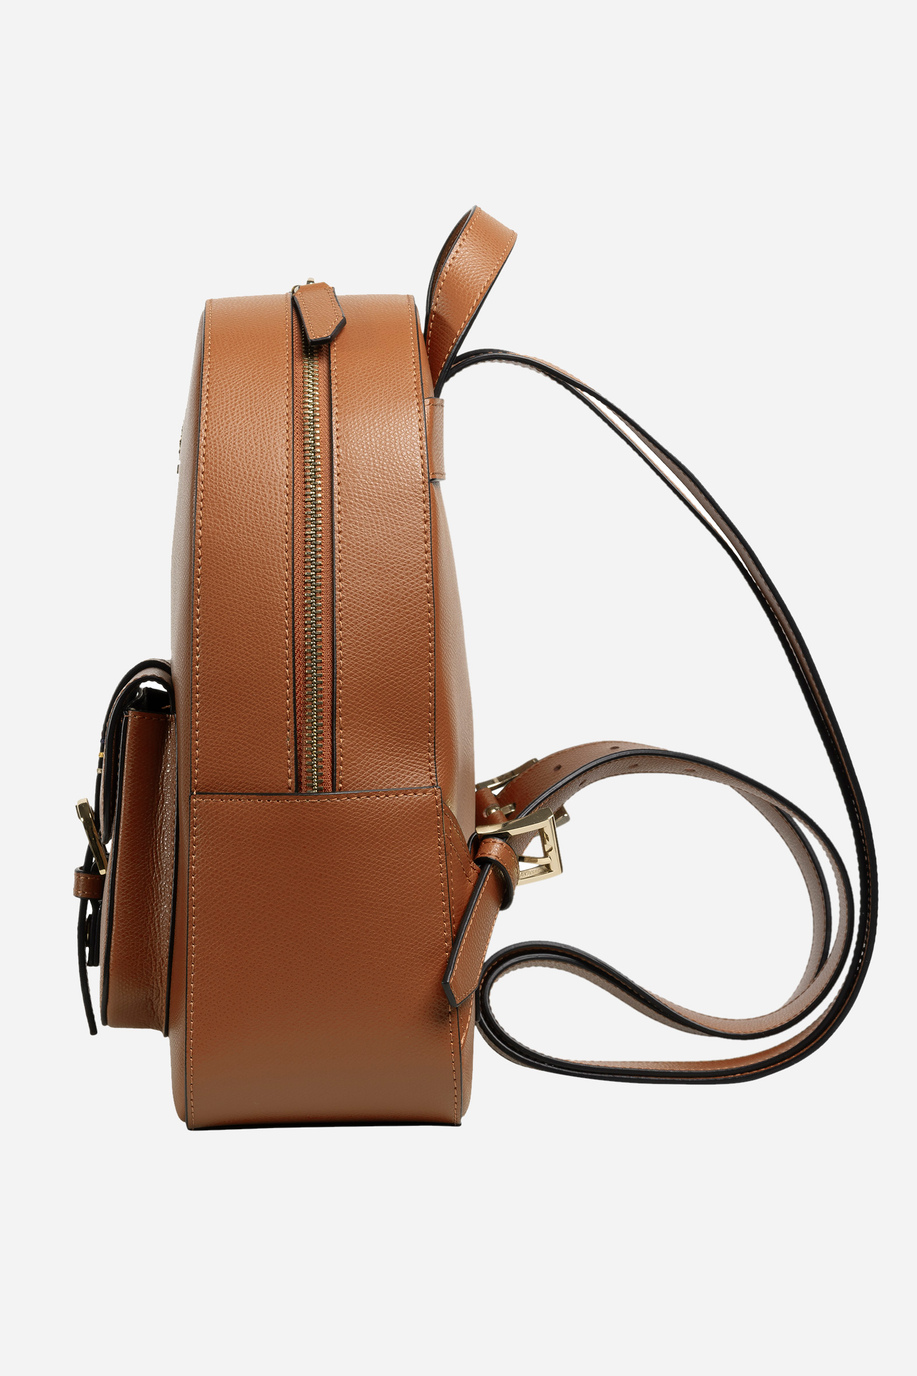 Women's leather rucksack - Accessories | La Martina - Official Online Shop